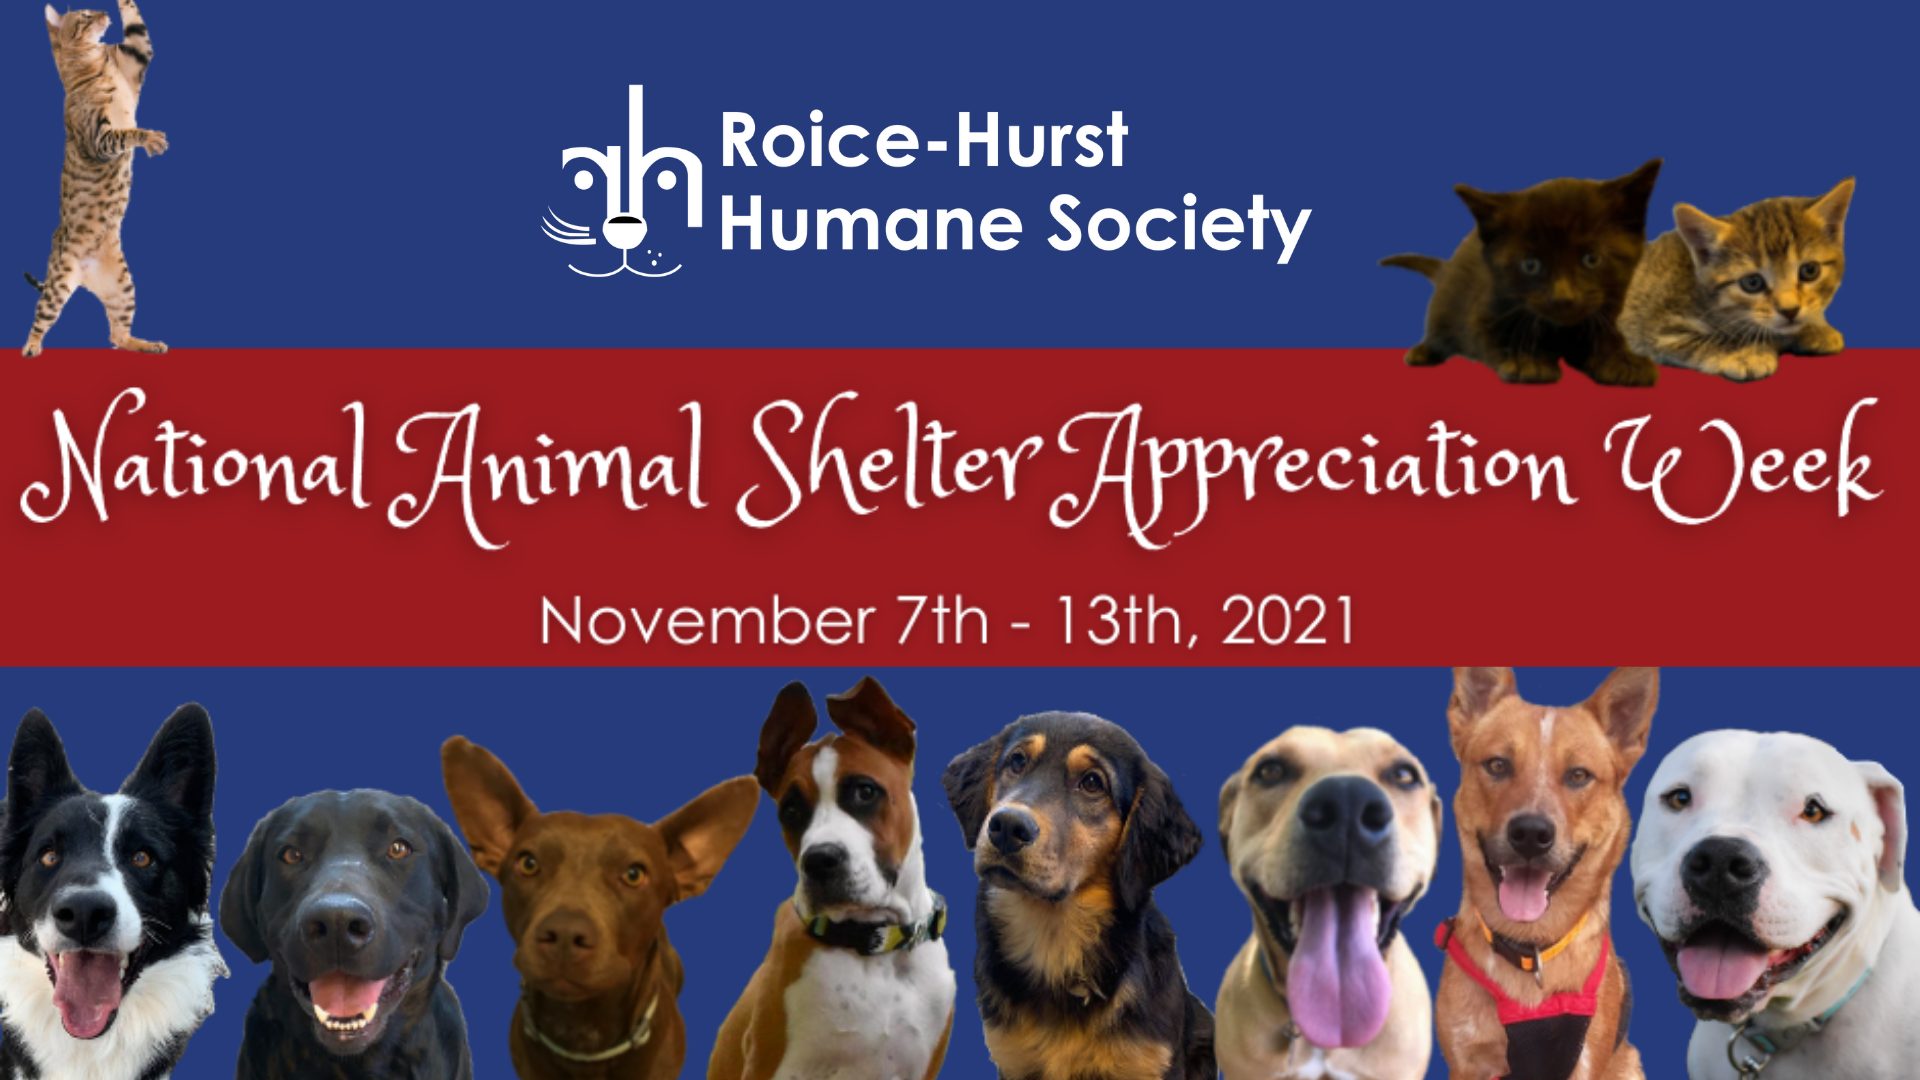 7 Ways to Celebrate National Animal Shelter Appreciation Week! -  Roice-Hurst Humane Society